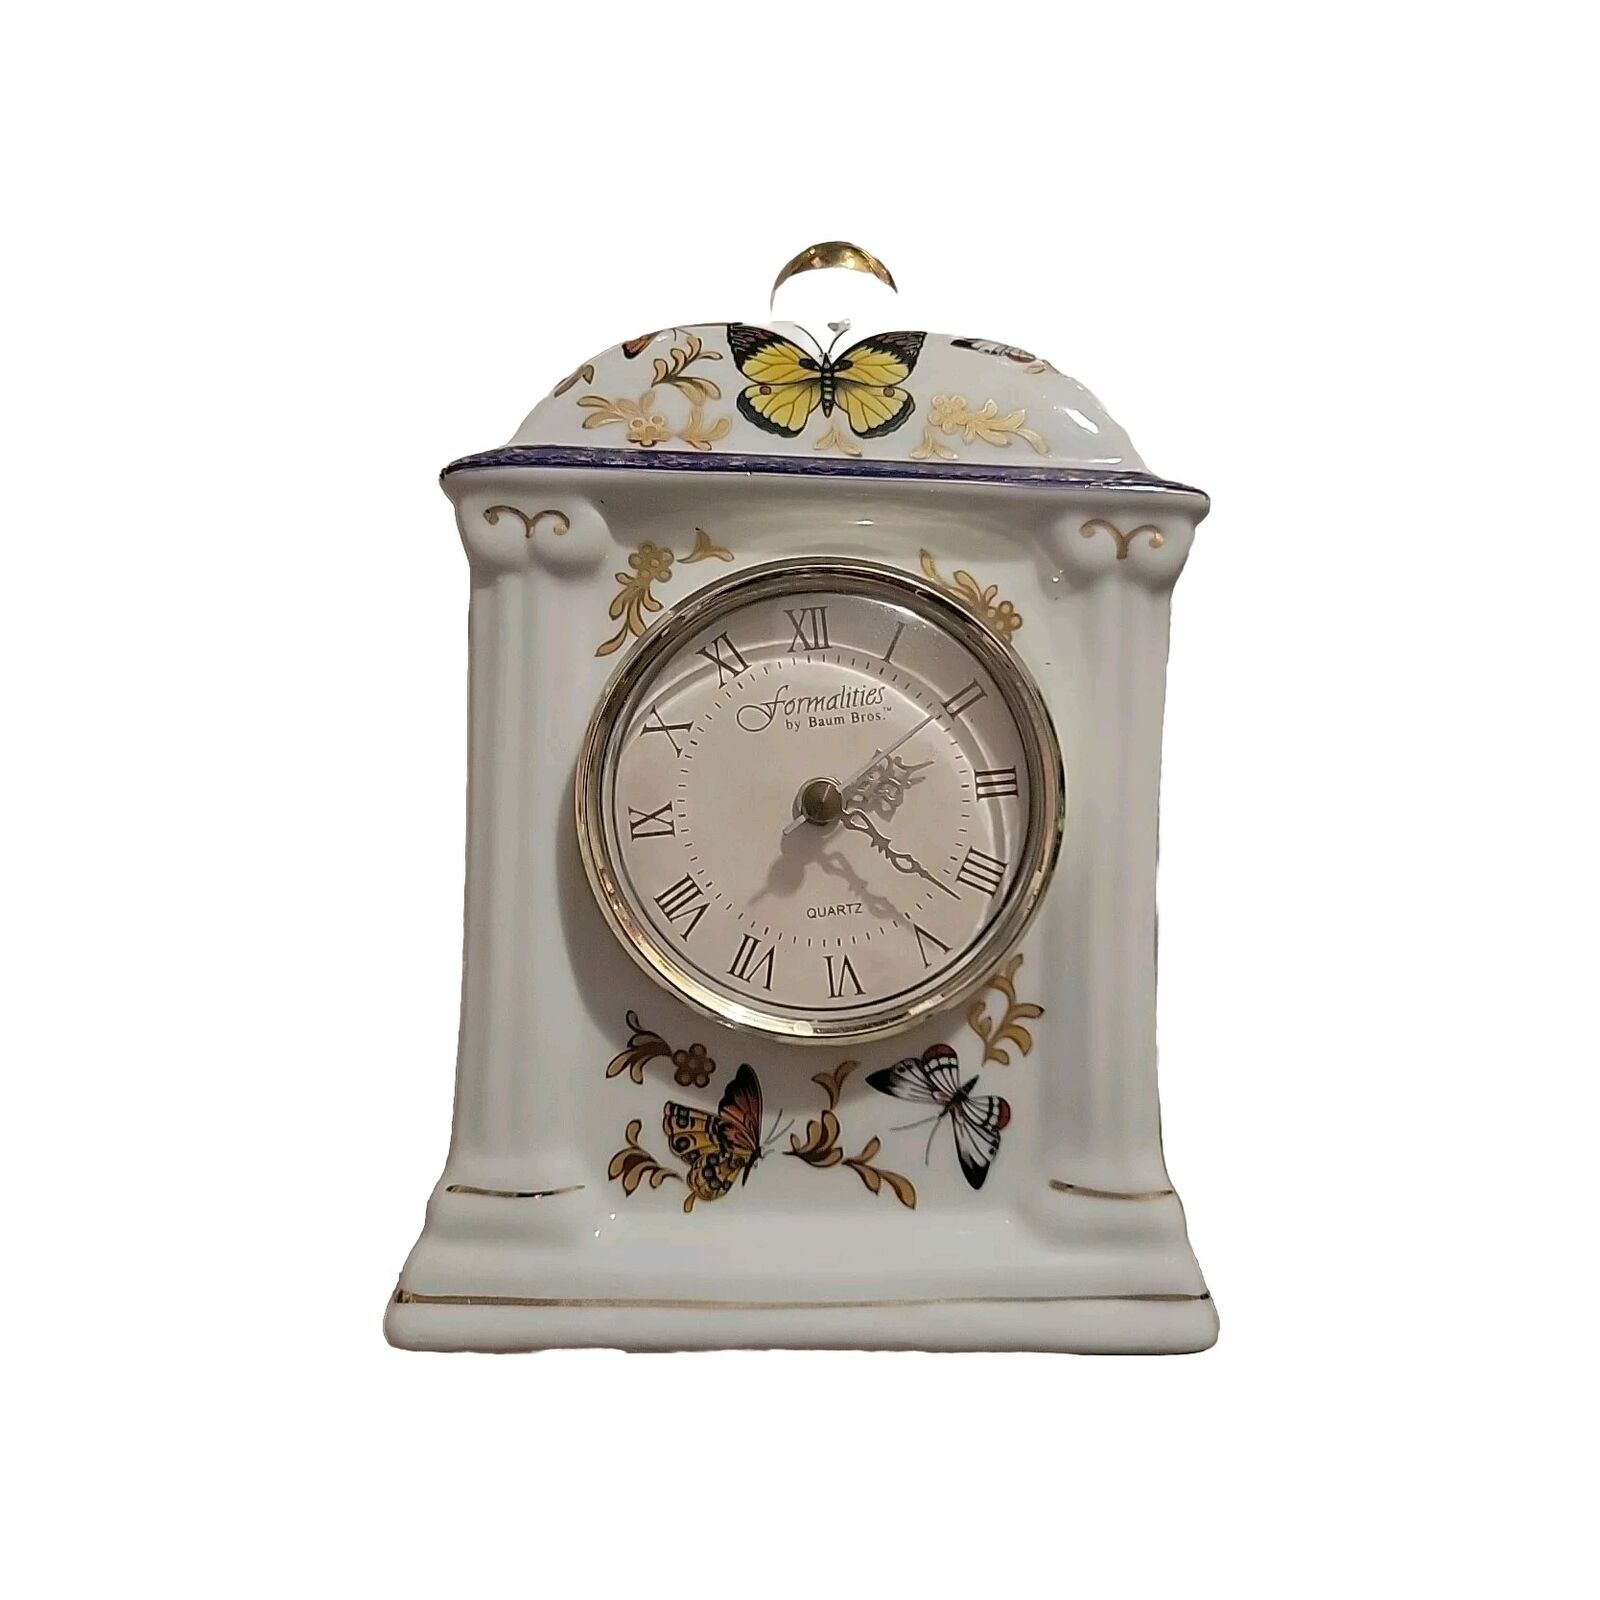 Baum Bros Formalities Butterfly Porcelain Clock